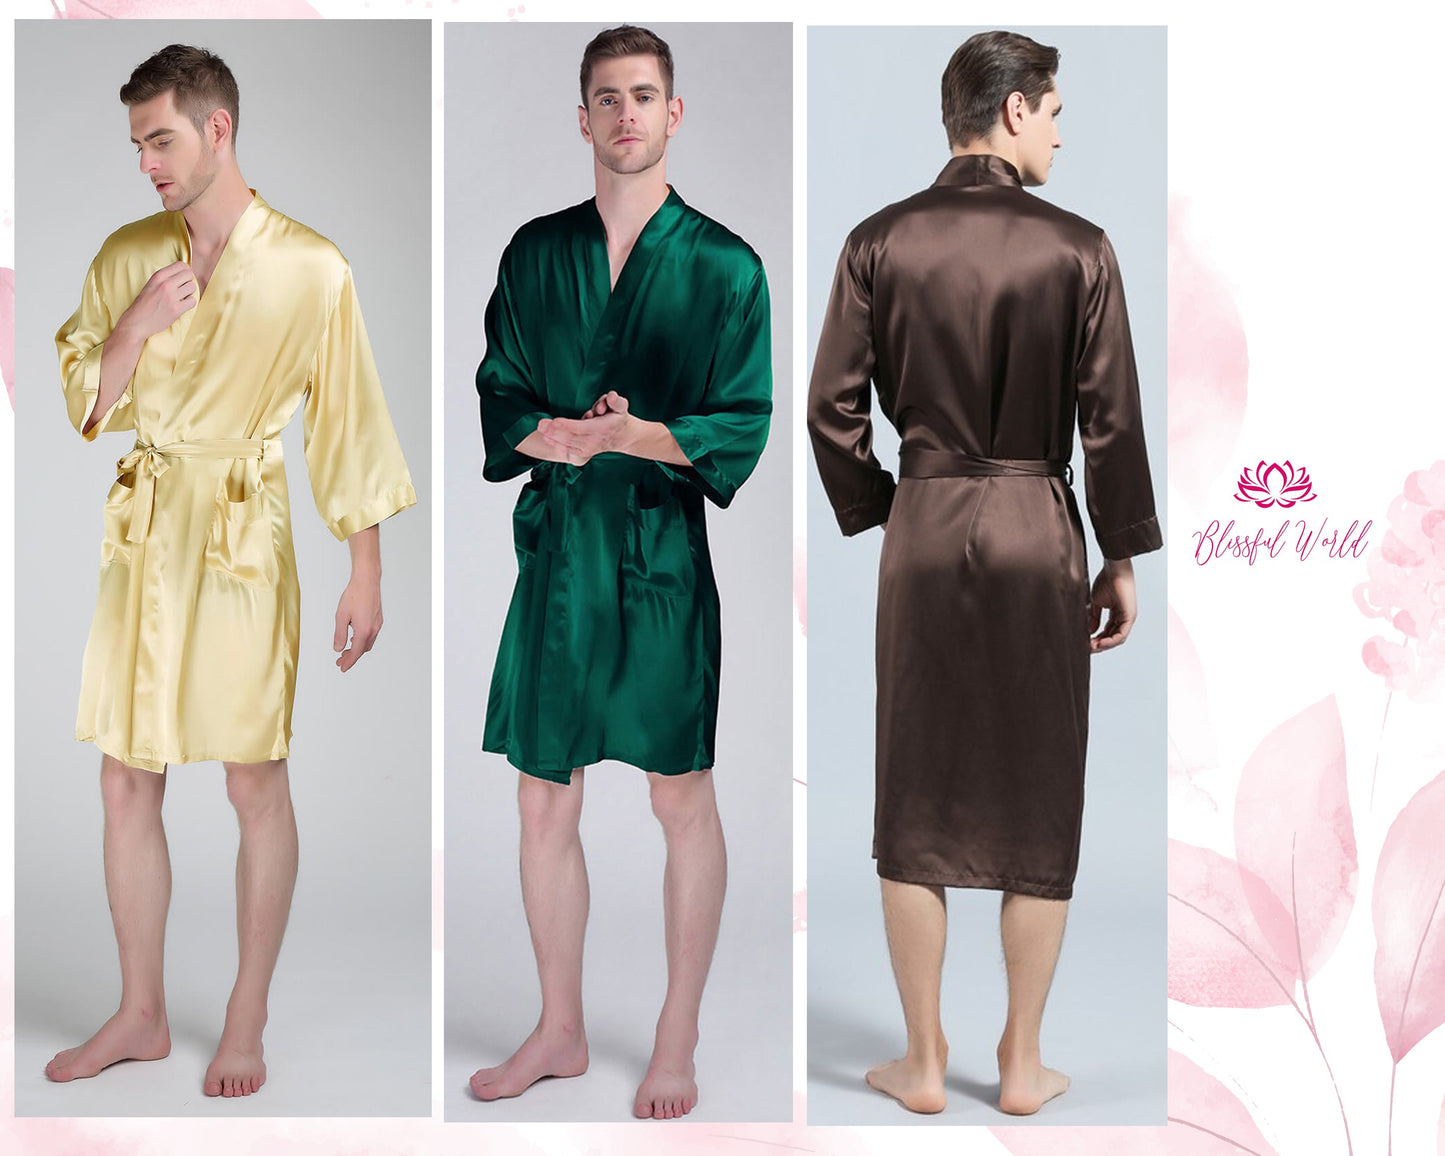 Personalized Men's Satin Robe, Groomsmen's Robe, Groomsmen’s Gifts, Wedding Gifts, Couple’s Gifts, Birthday Present, Bachelor's Party